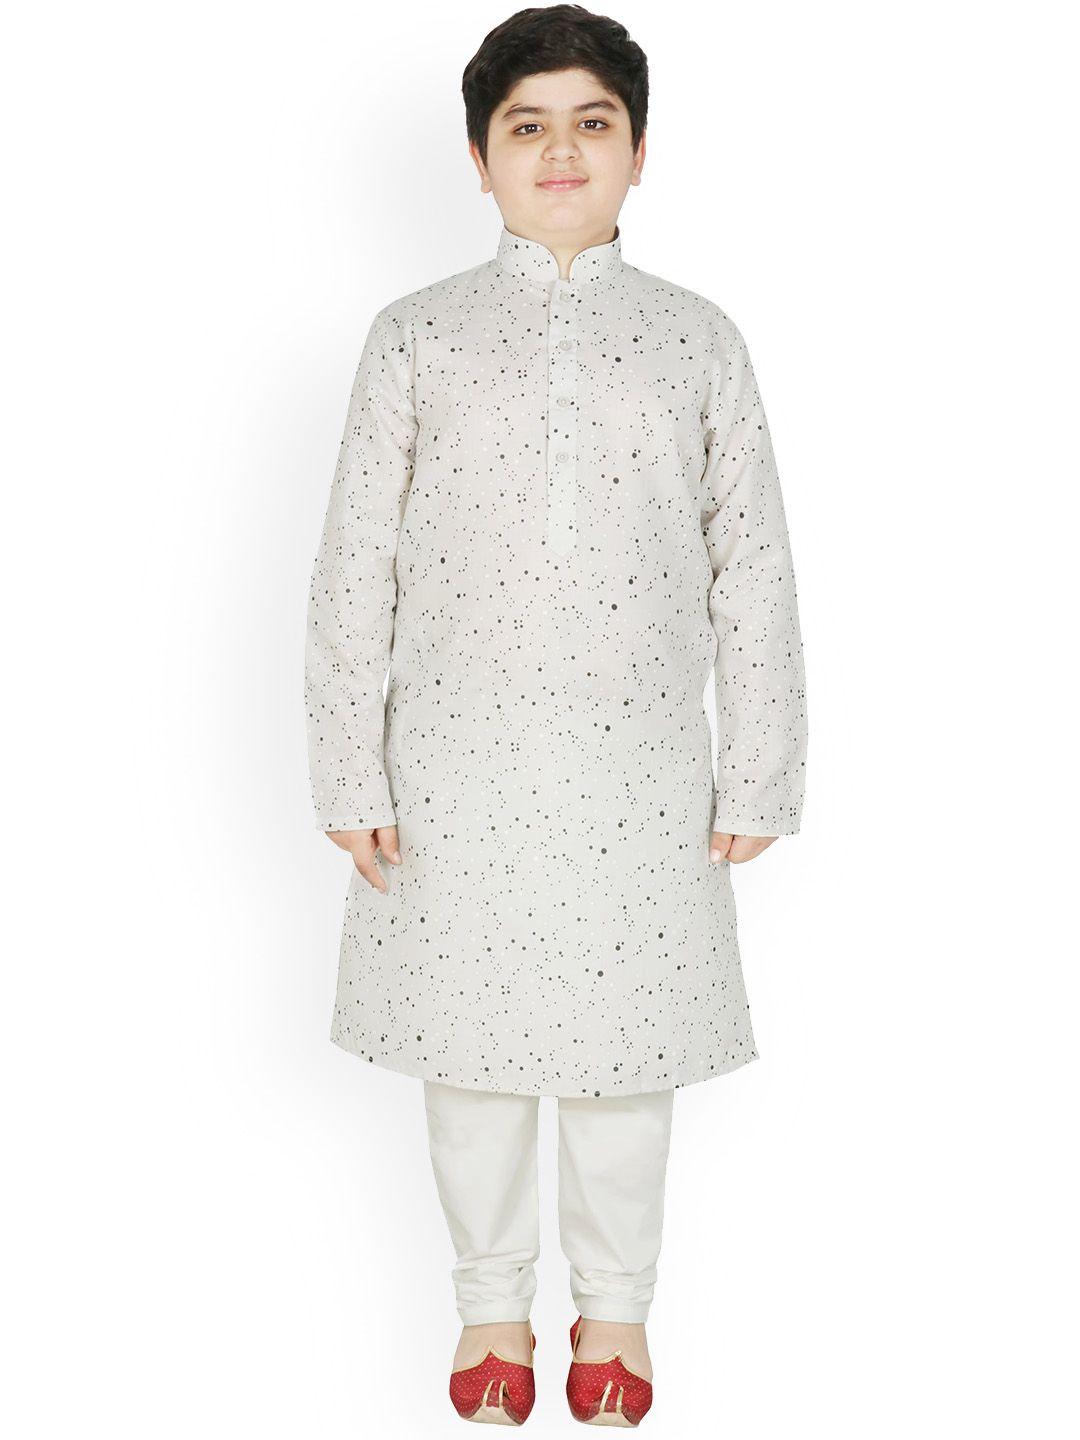 sg yuvraj boys polka dots printed pure cotton kurta with pyjamas